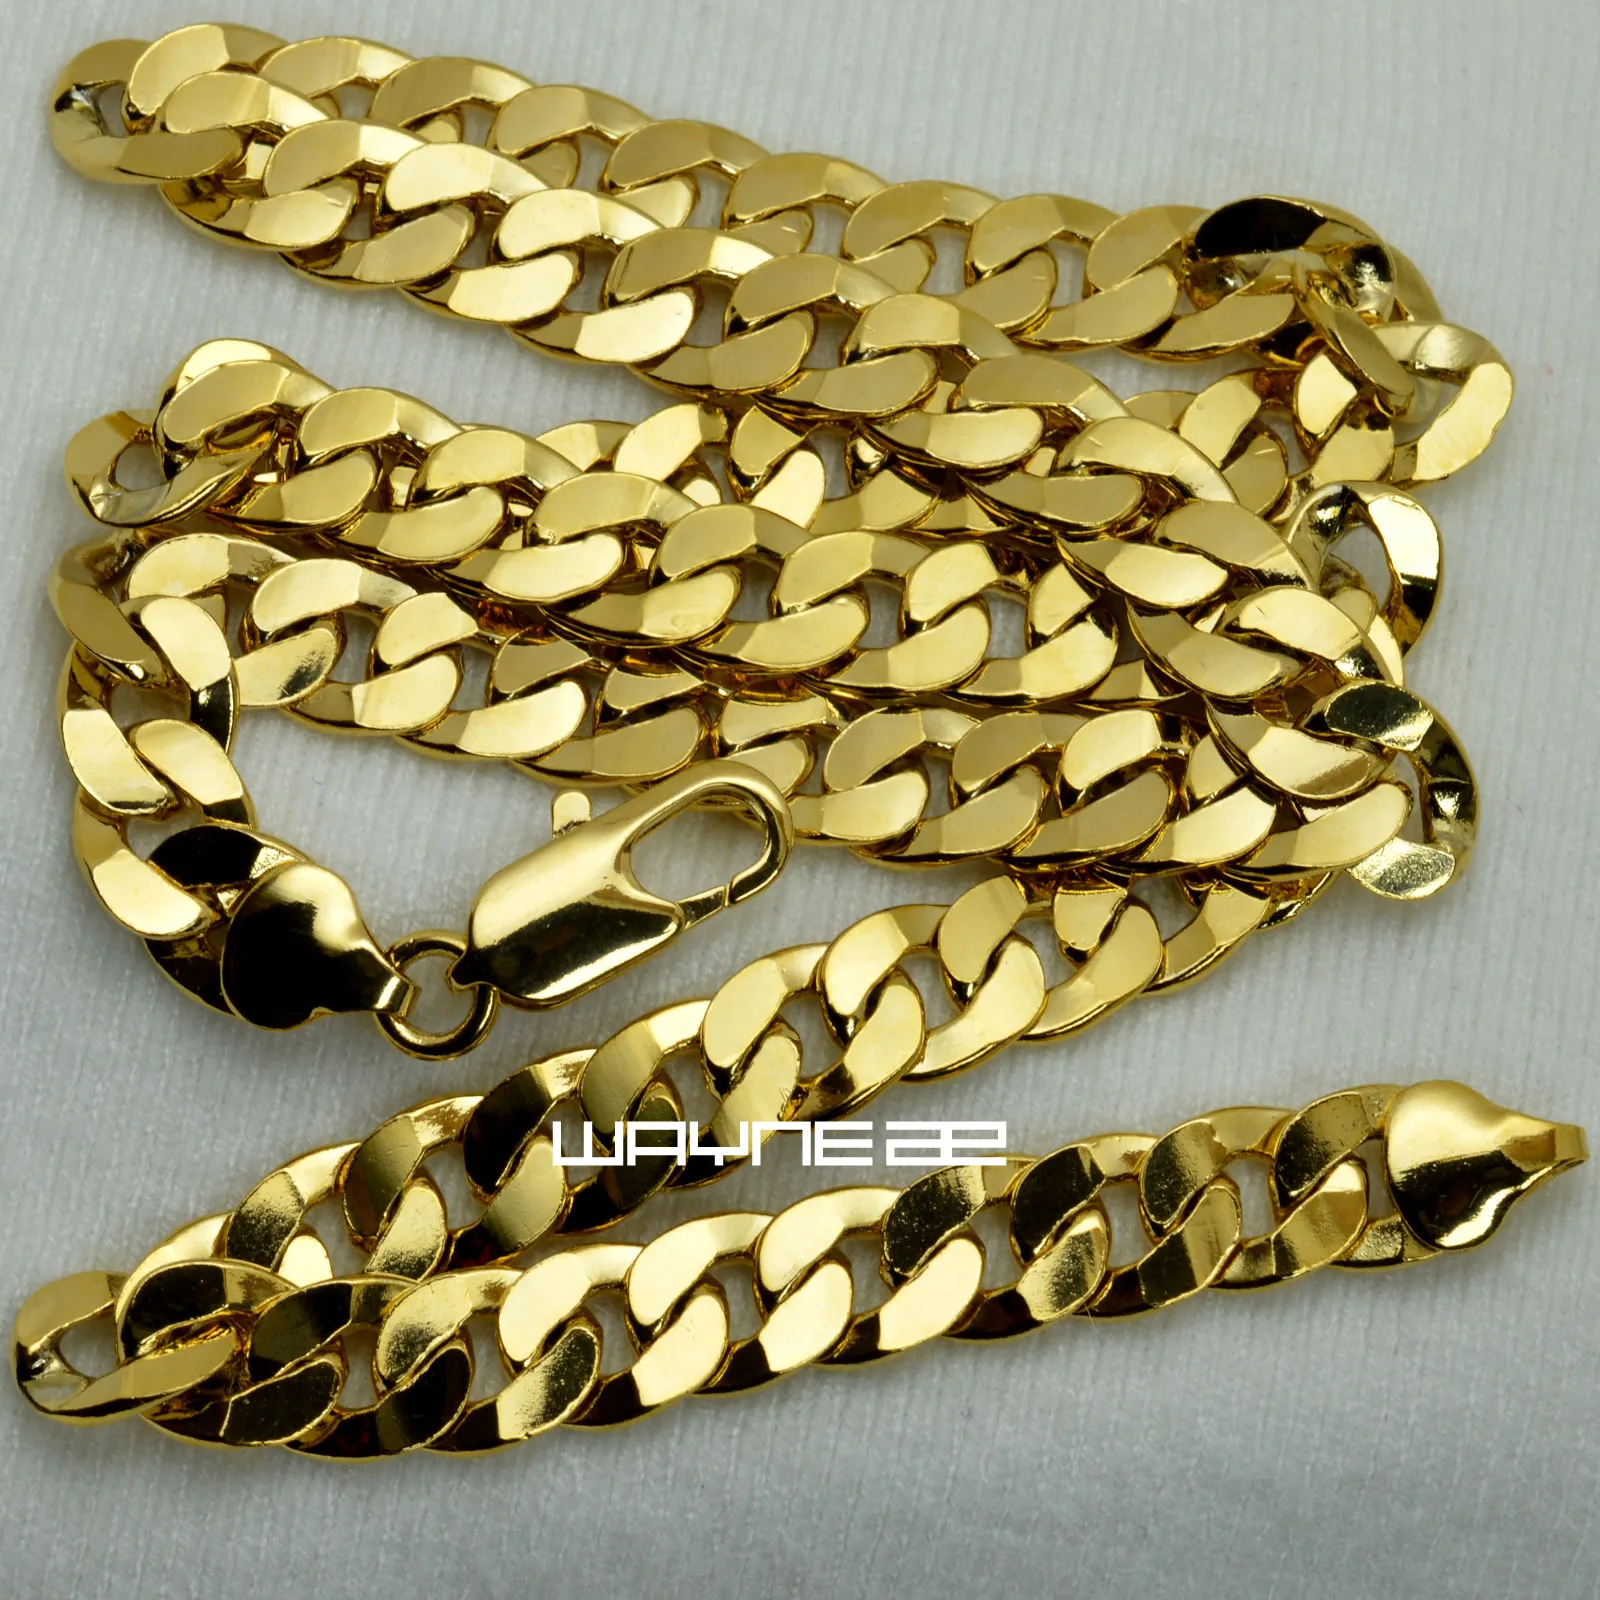 Colar masculino legal 60cm 18k preenchido com ouro 9mm tom dourado n323 65g256q